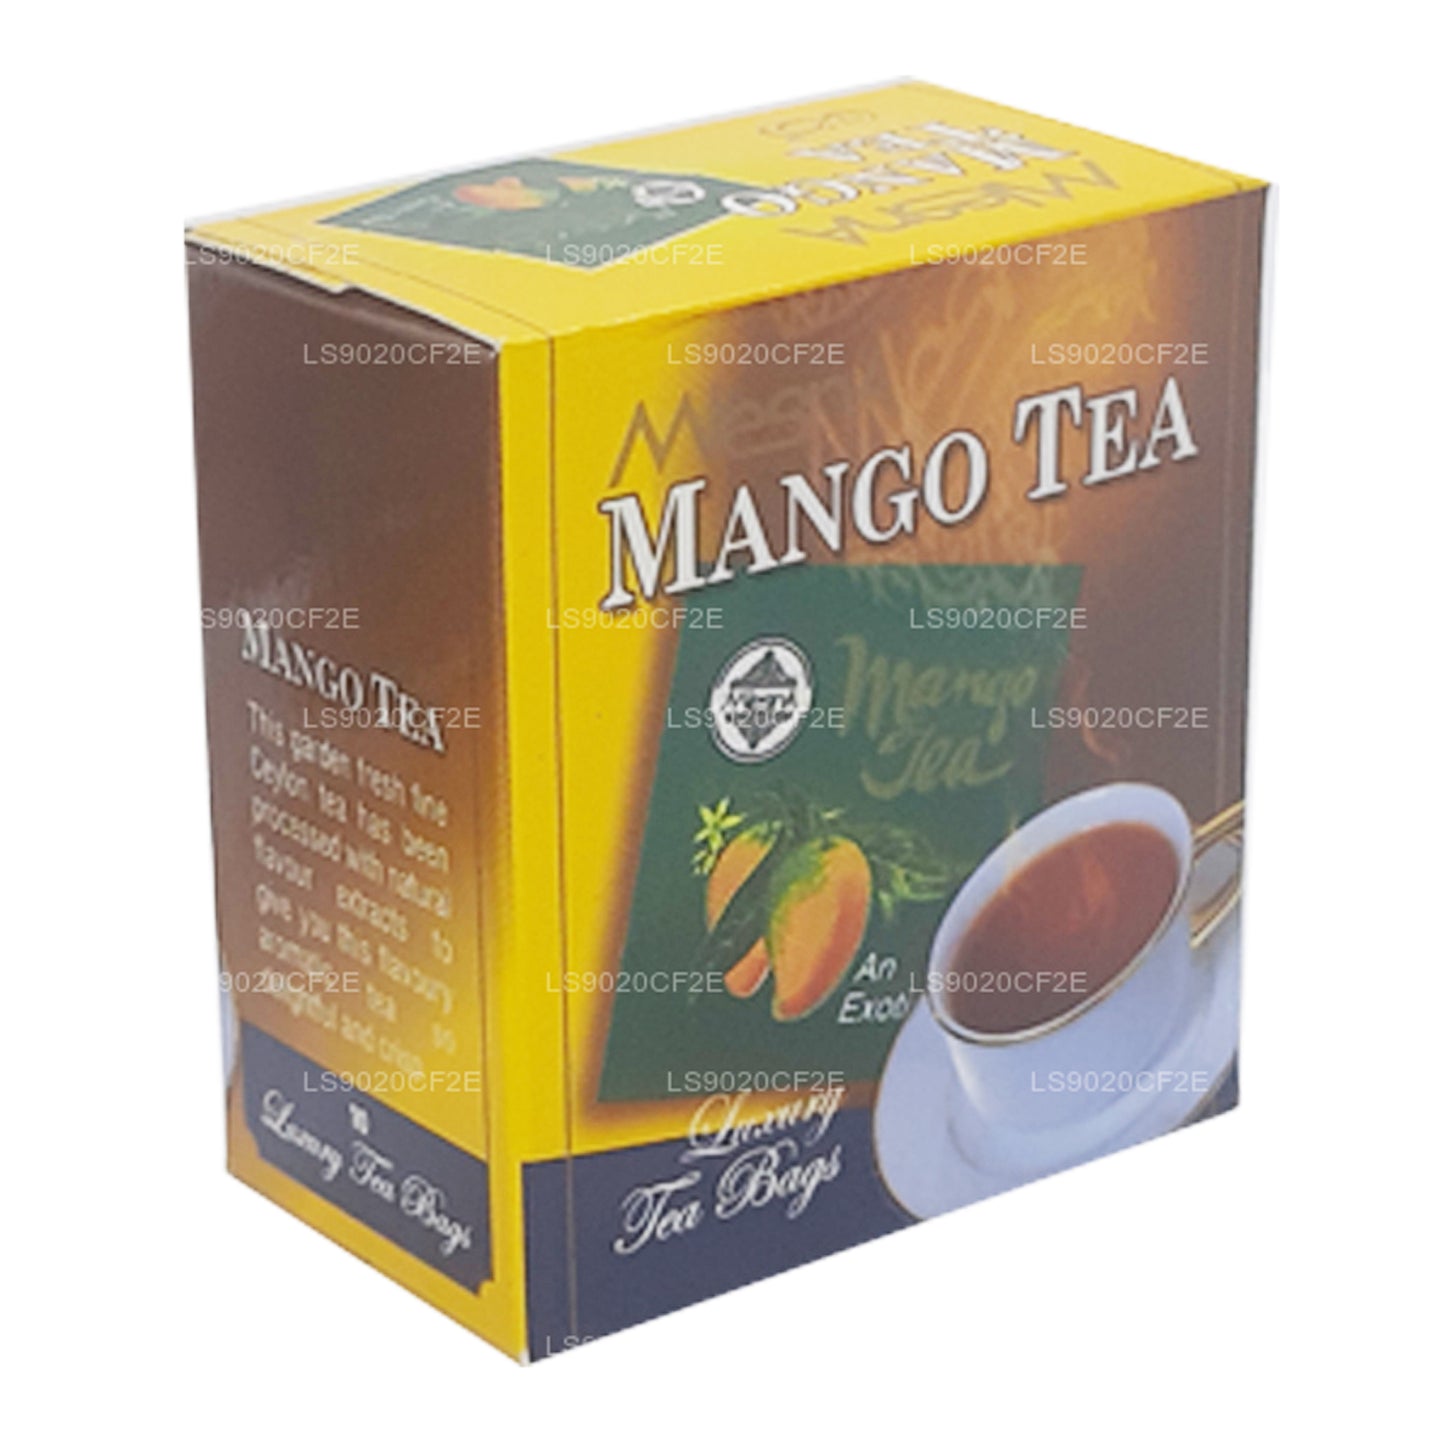 Mlesna Mango Tea (20g) 10 Luxury Tea Bags